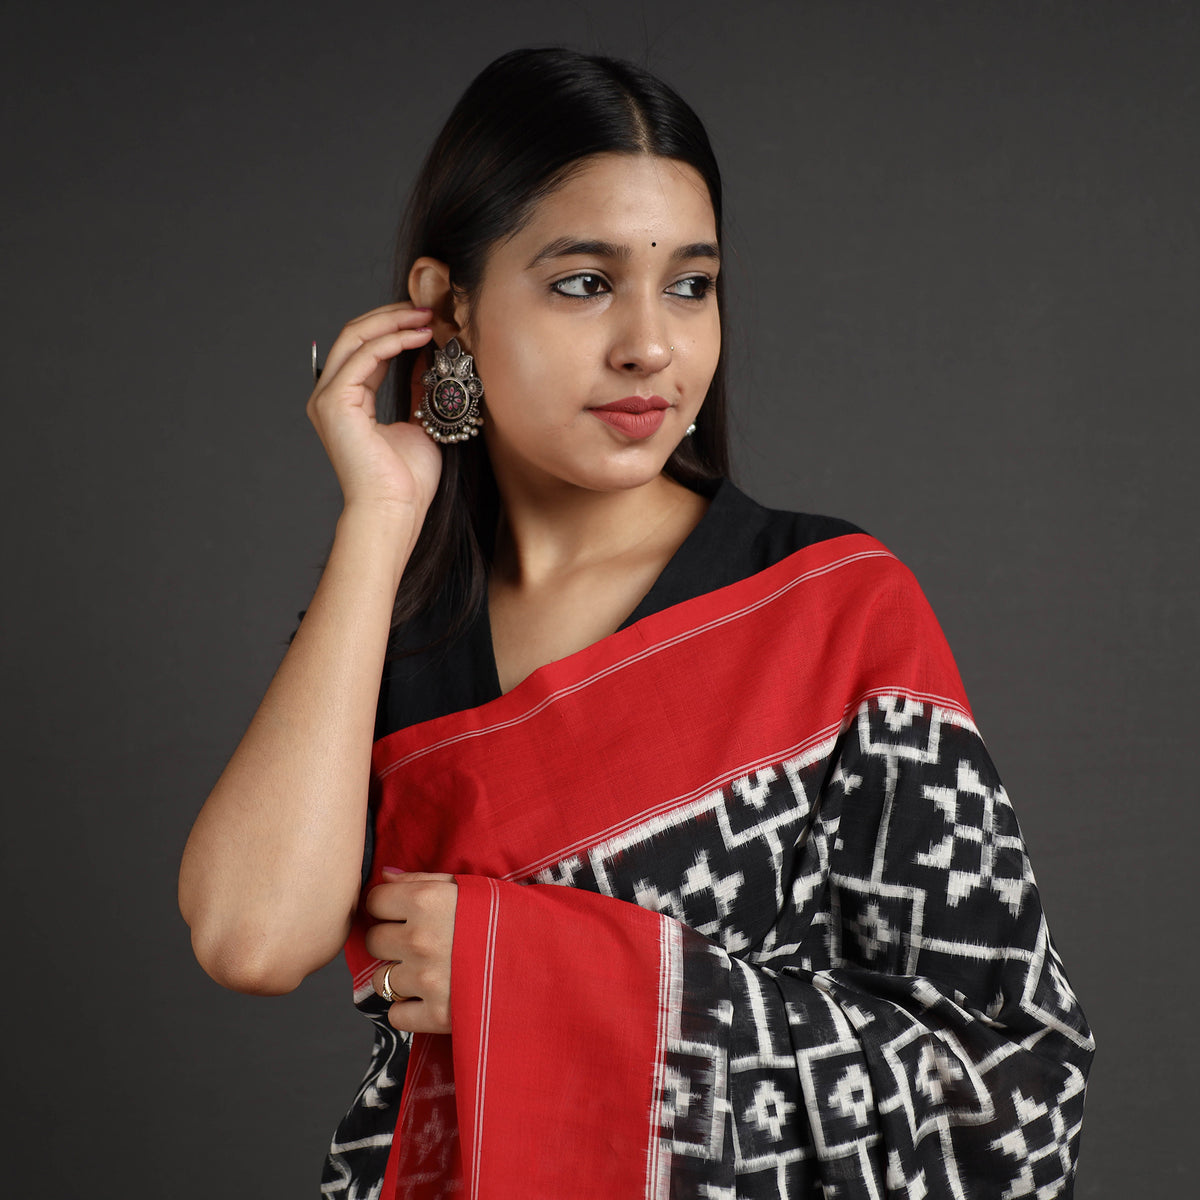 Telia Rumal Pochampally Double Ikat Weave Handloom Cotton Saree